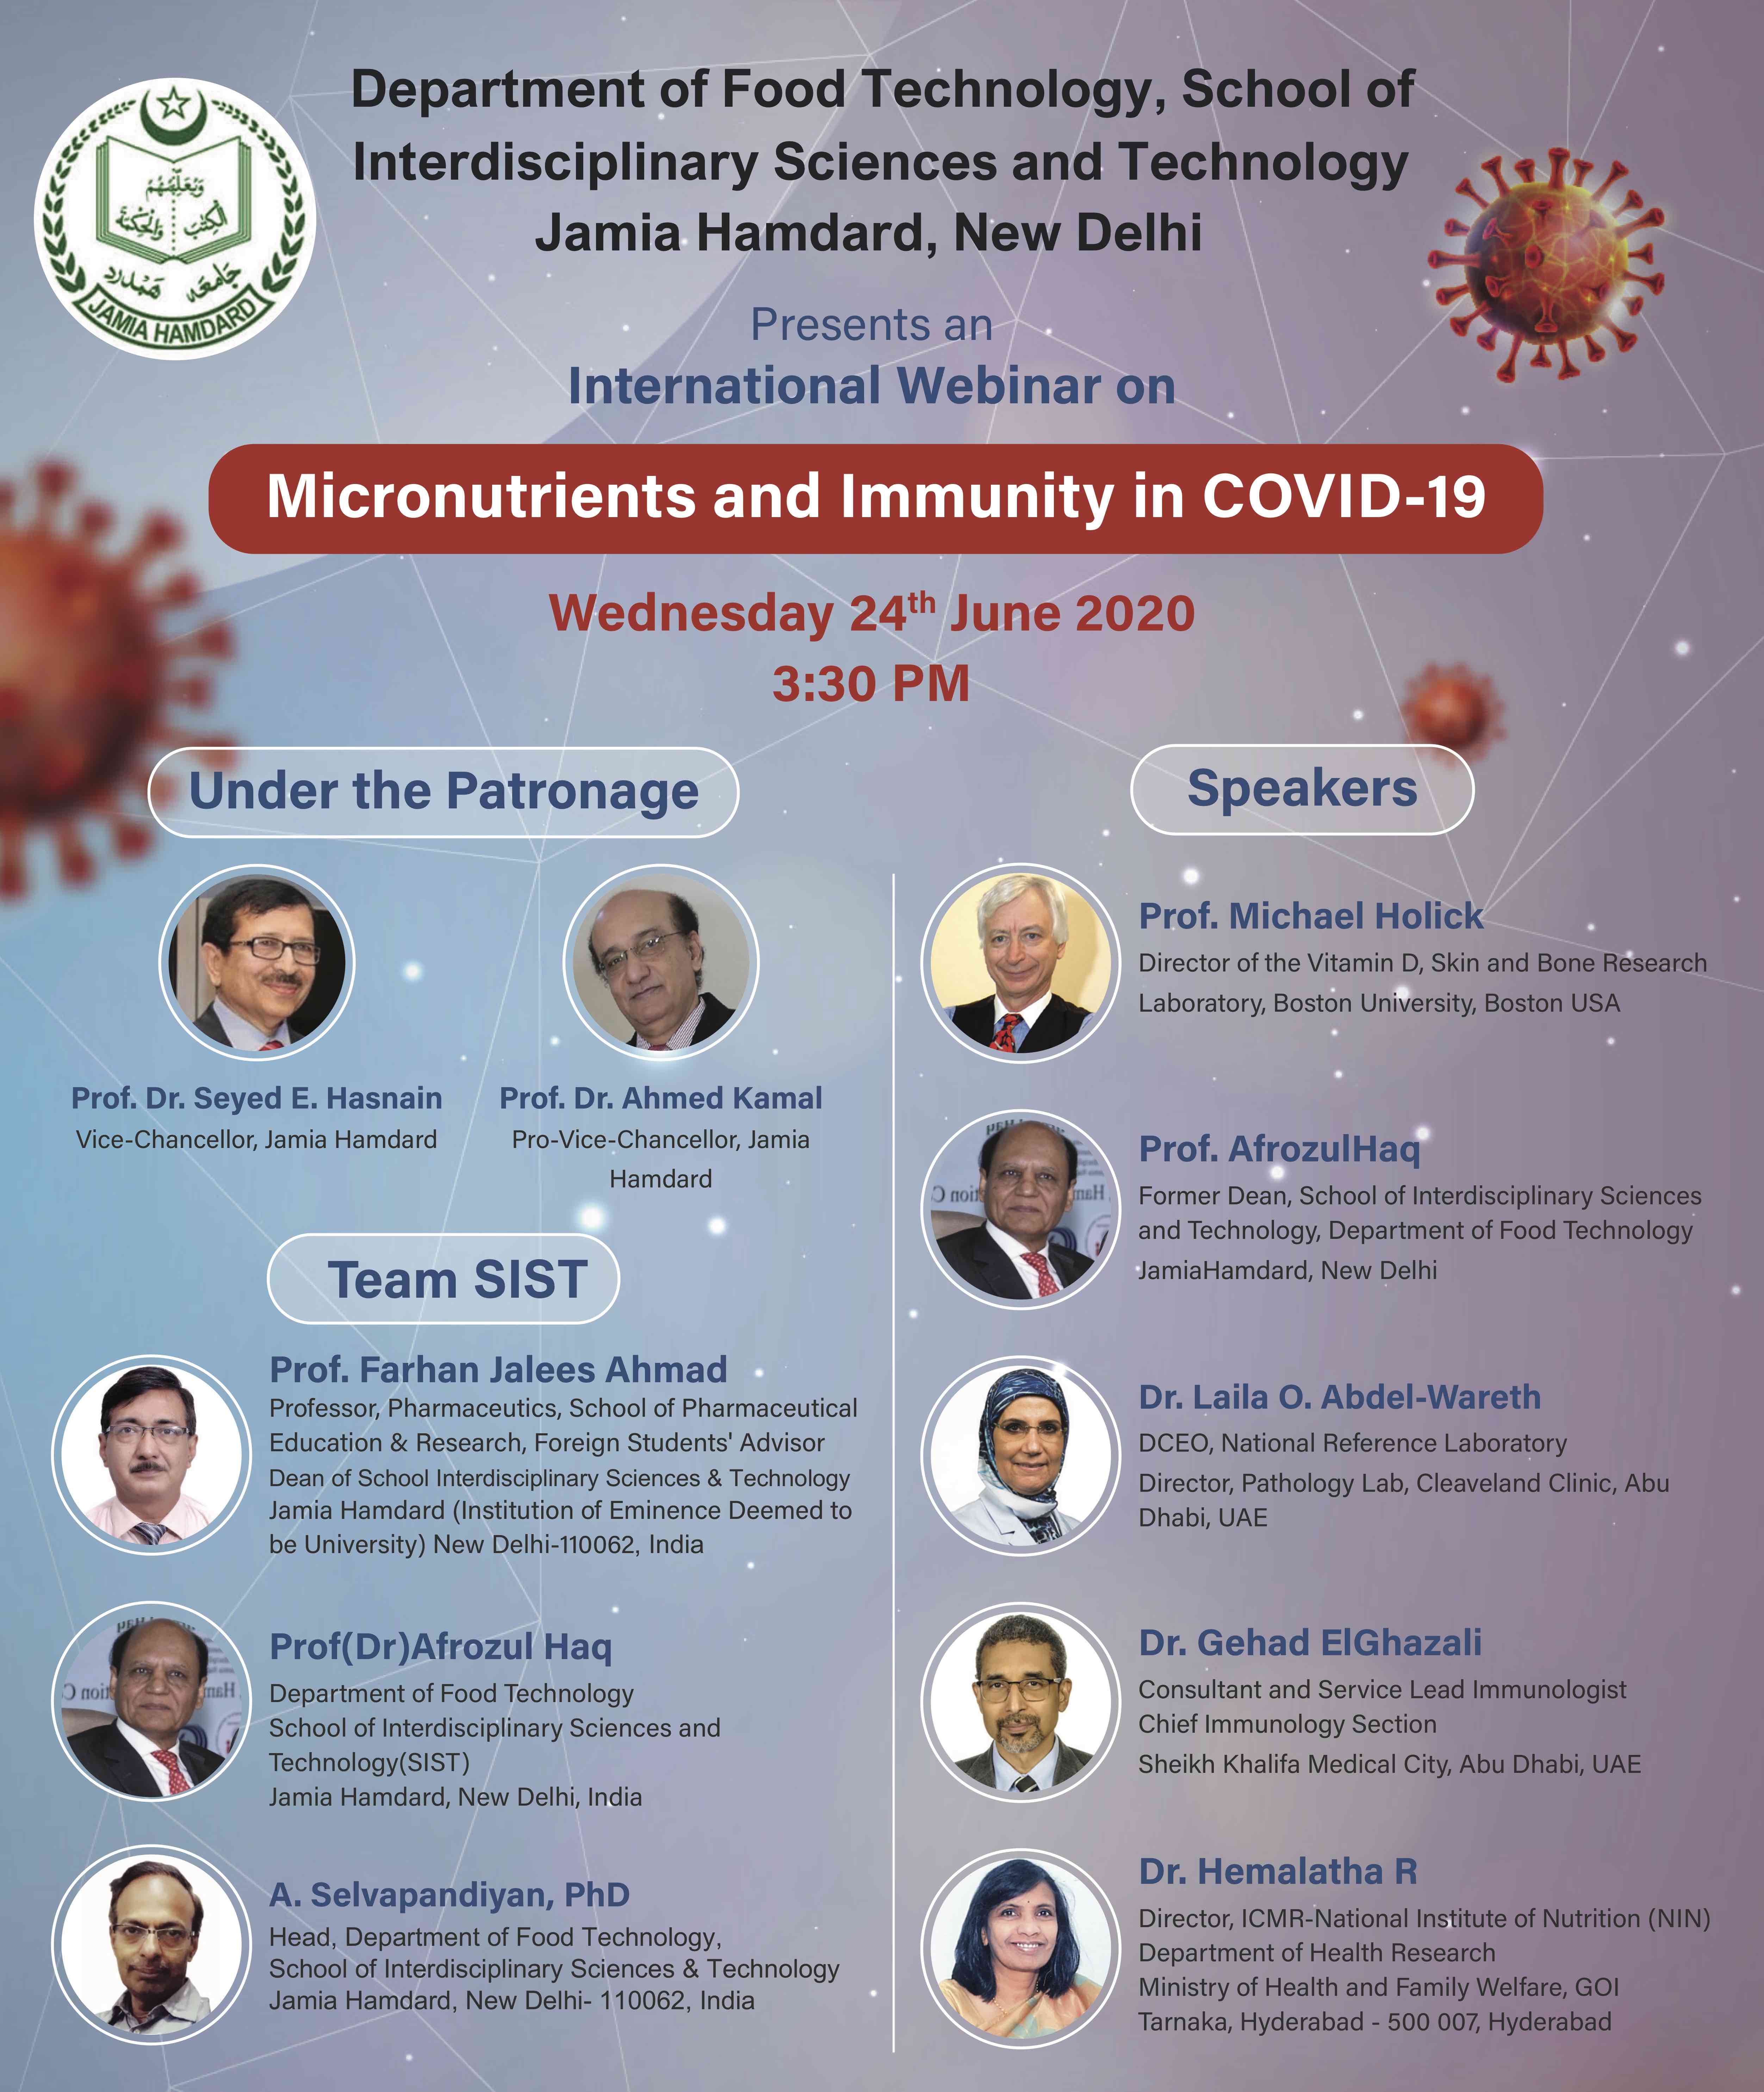 jamia-hamdard-organized-international-webinar-on-micronutrients-and-immunity-in-covid-19